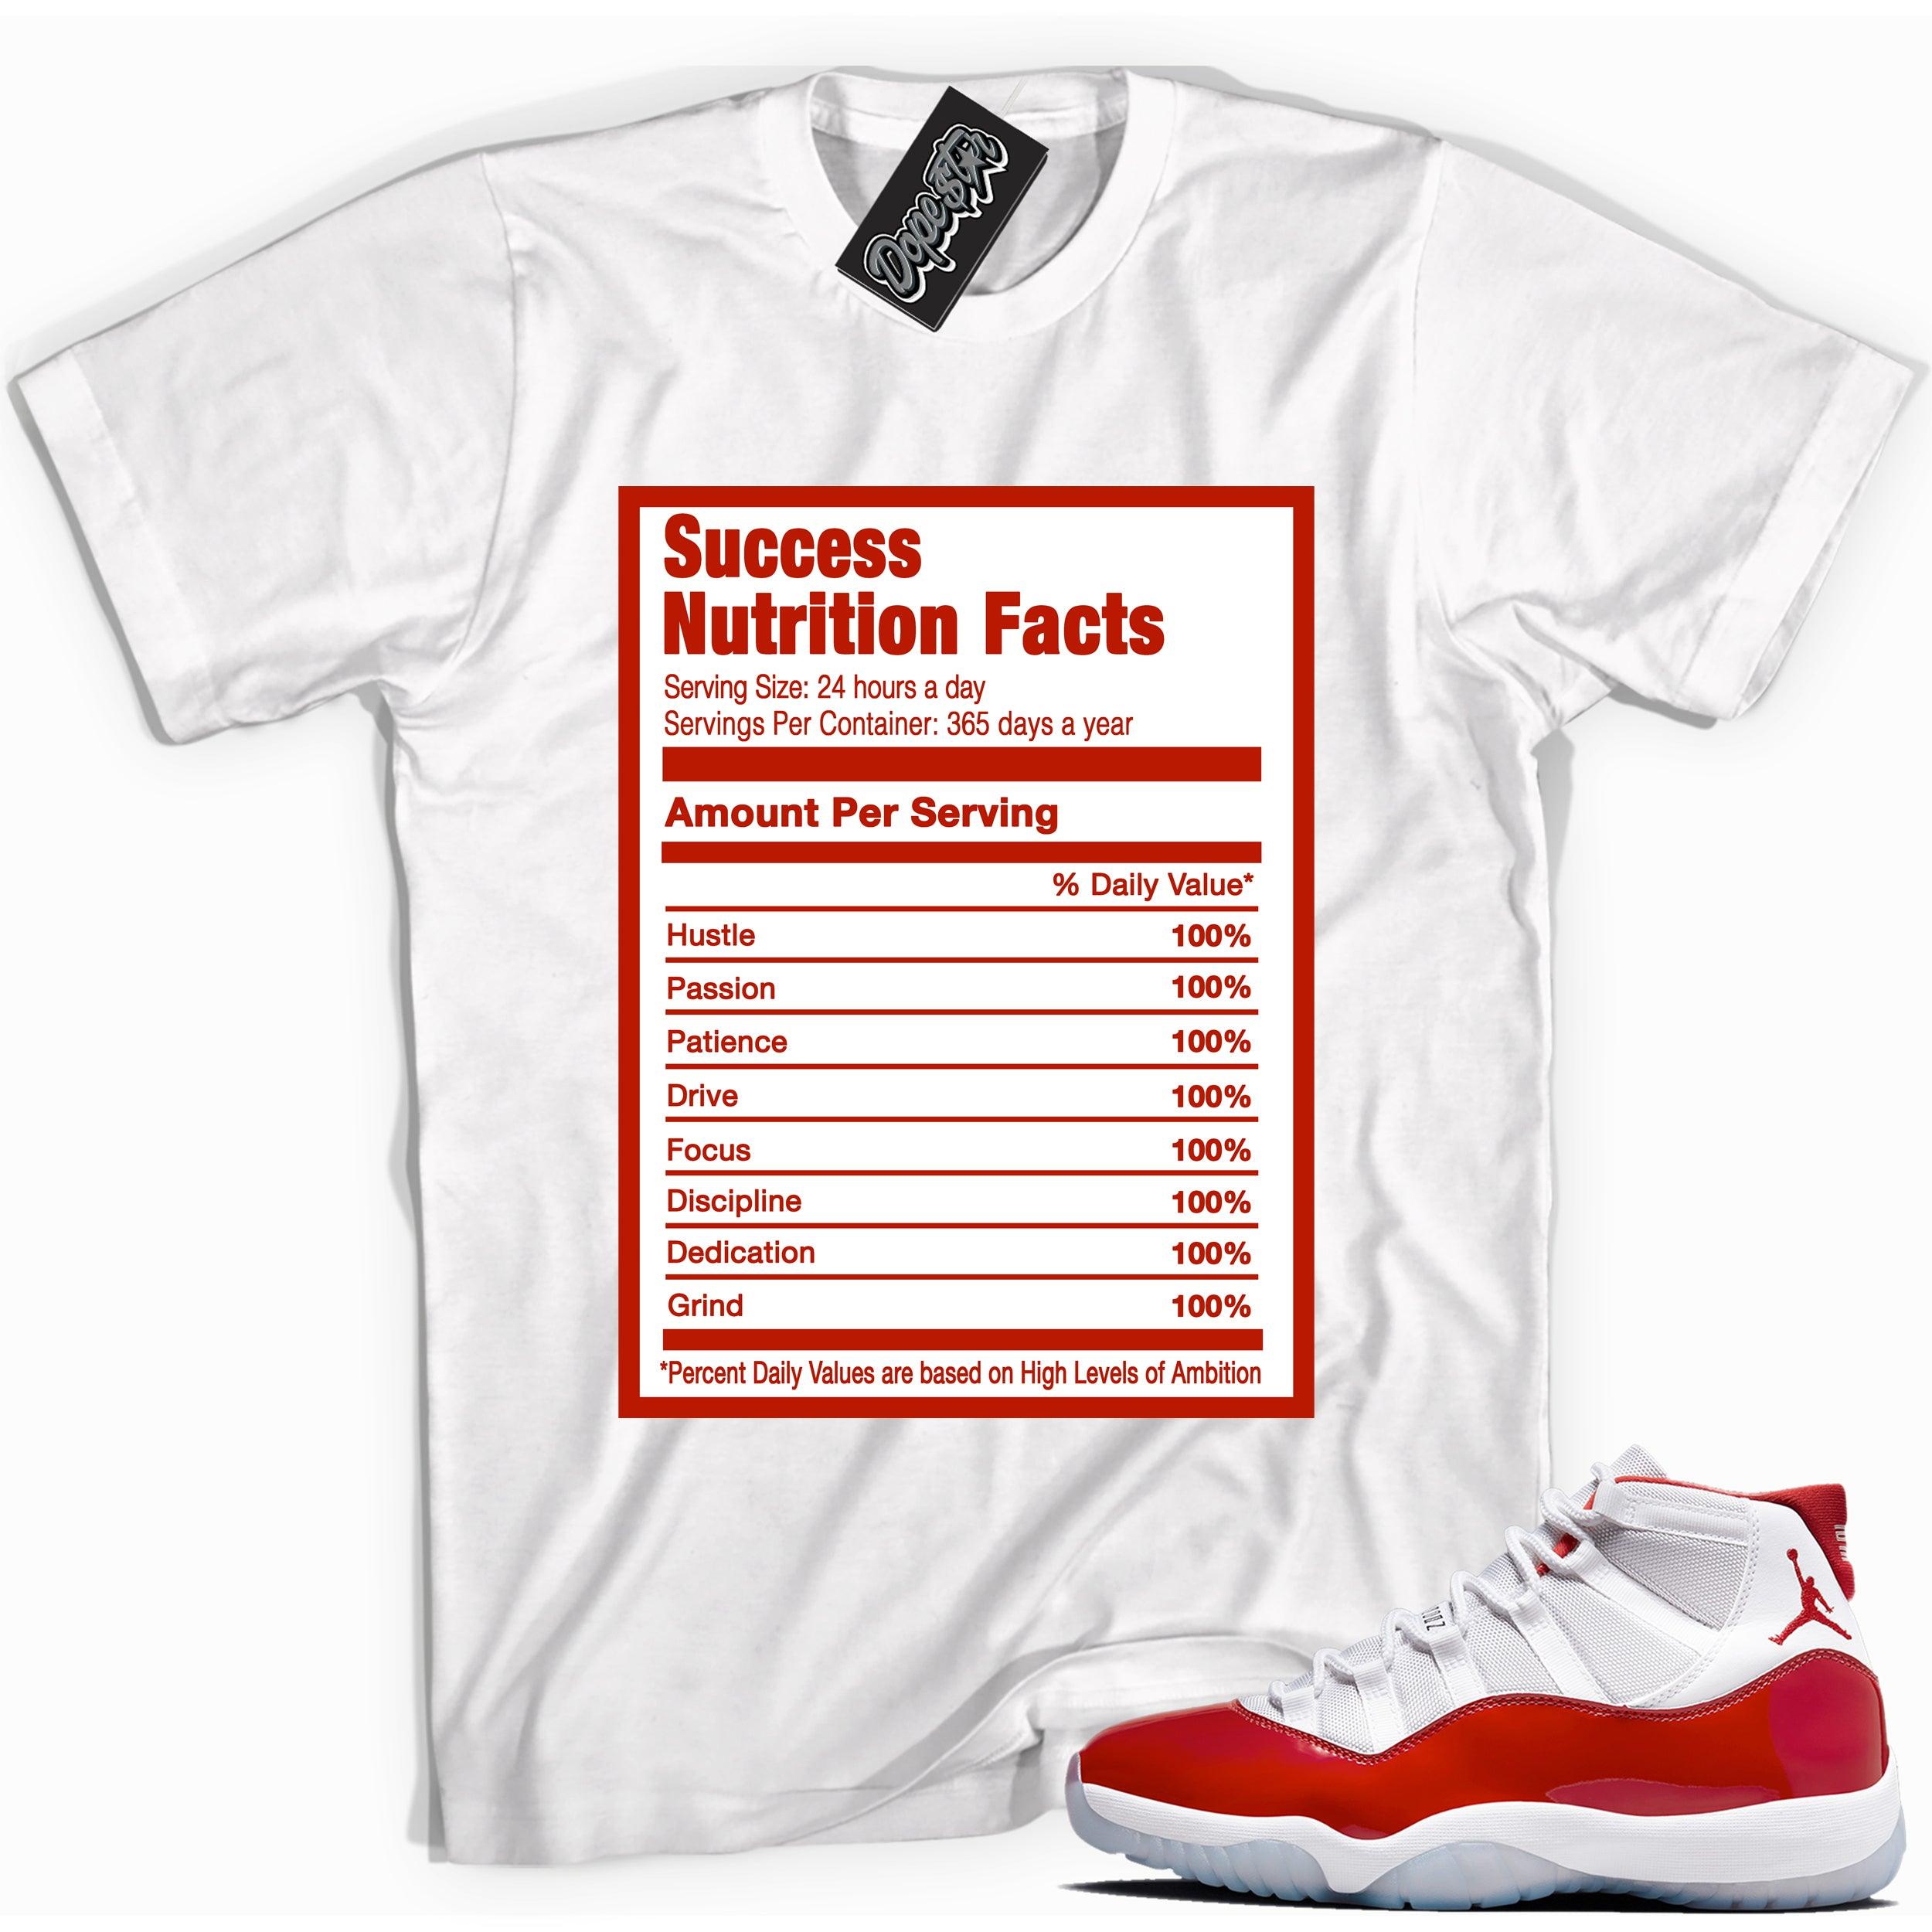 Success Nutrition Shirt Air Jordan 11 Cherry photo